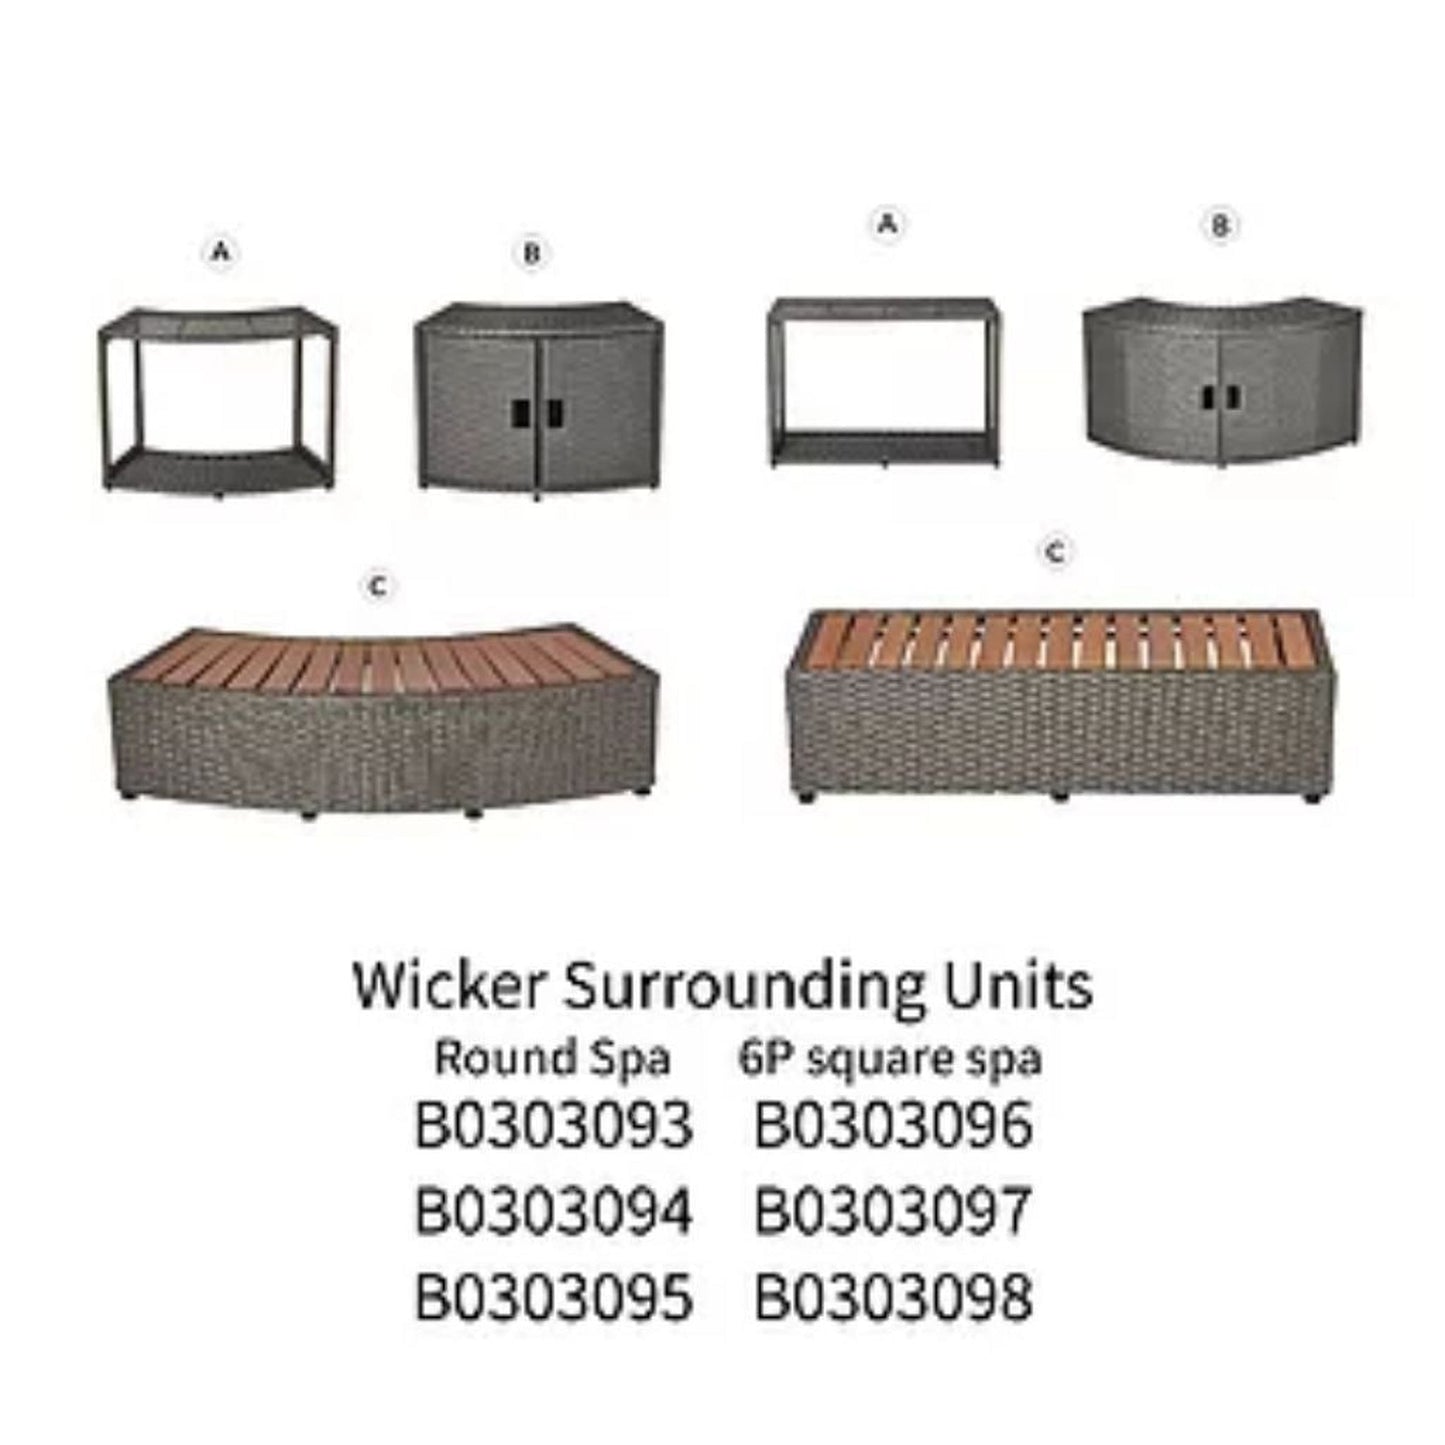 MSpa Wicker Surrounding Units For Hot Tub